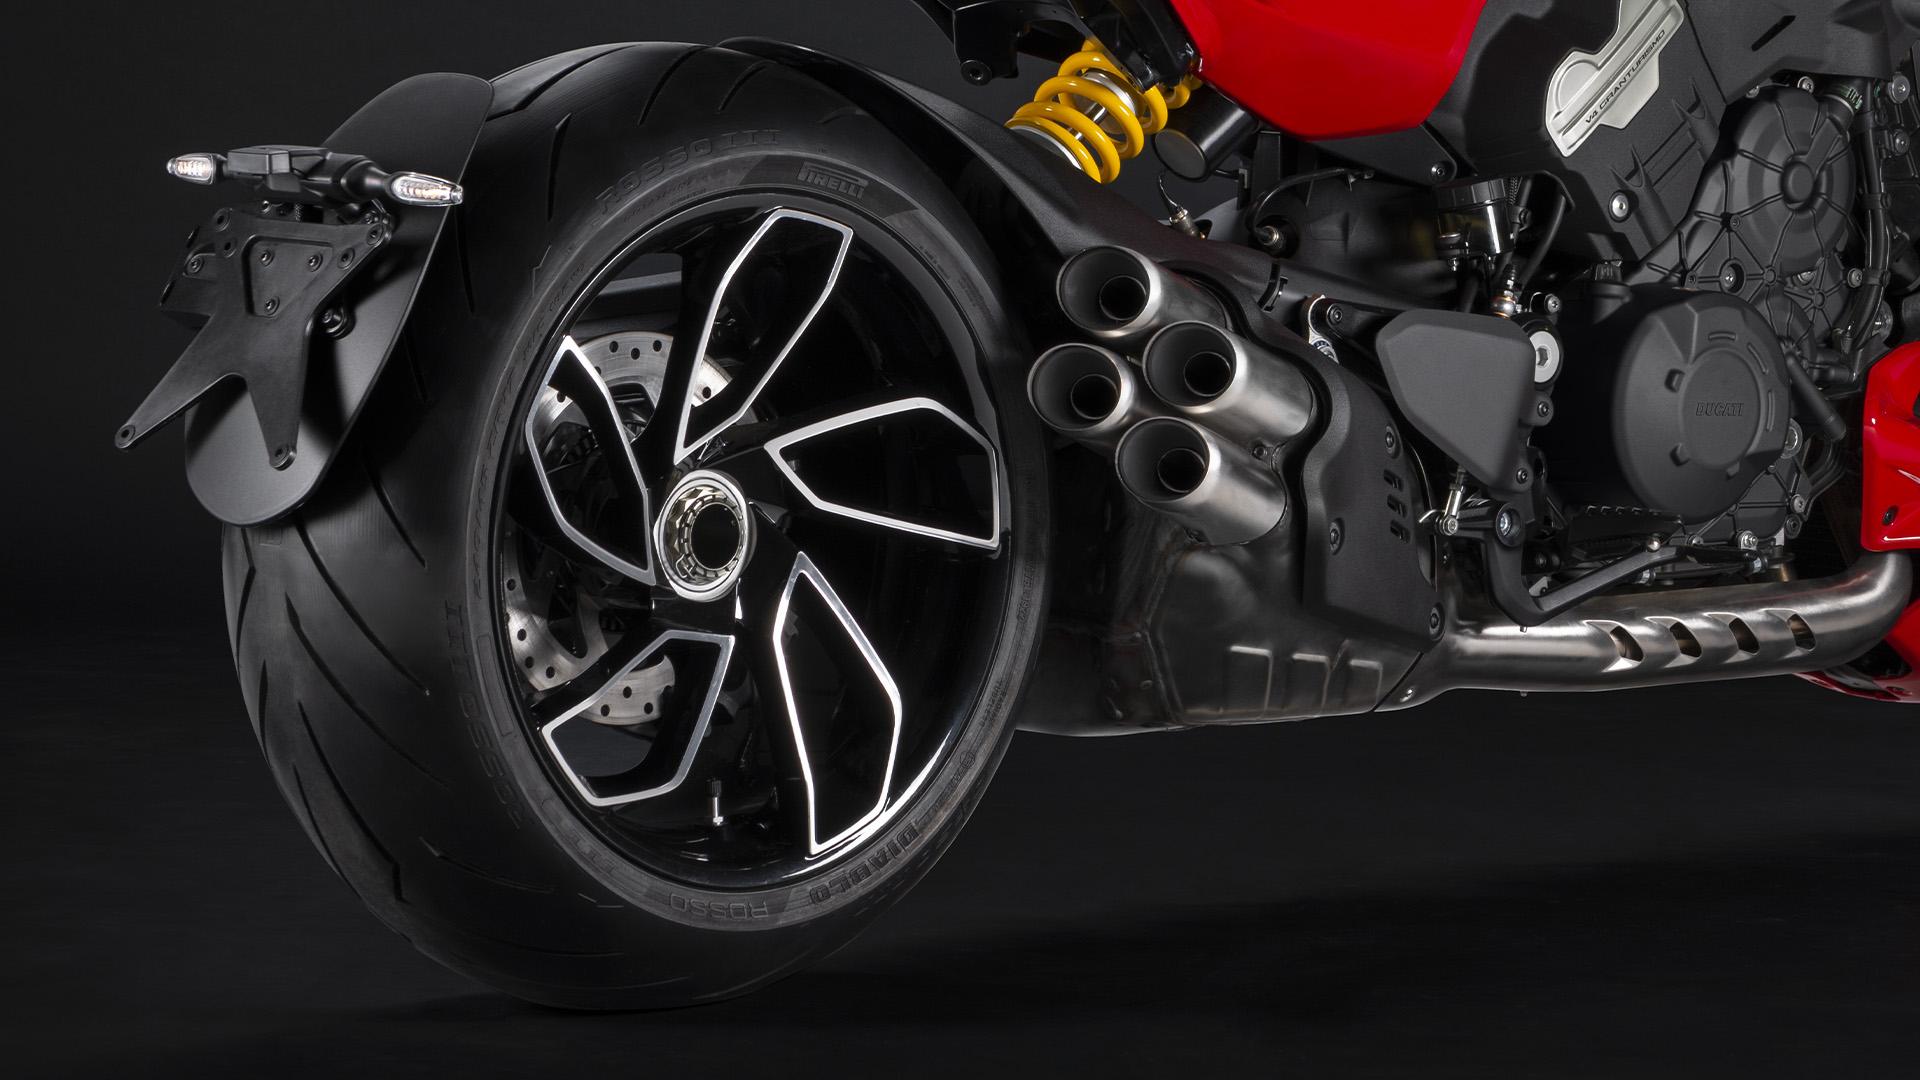 Ducati Diavel V4 - Exposed Exhaust